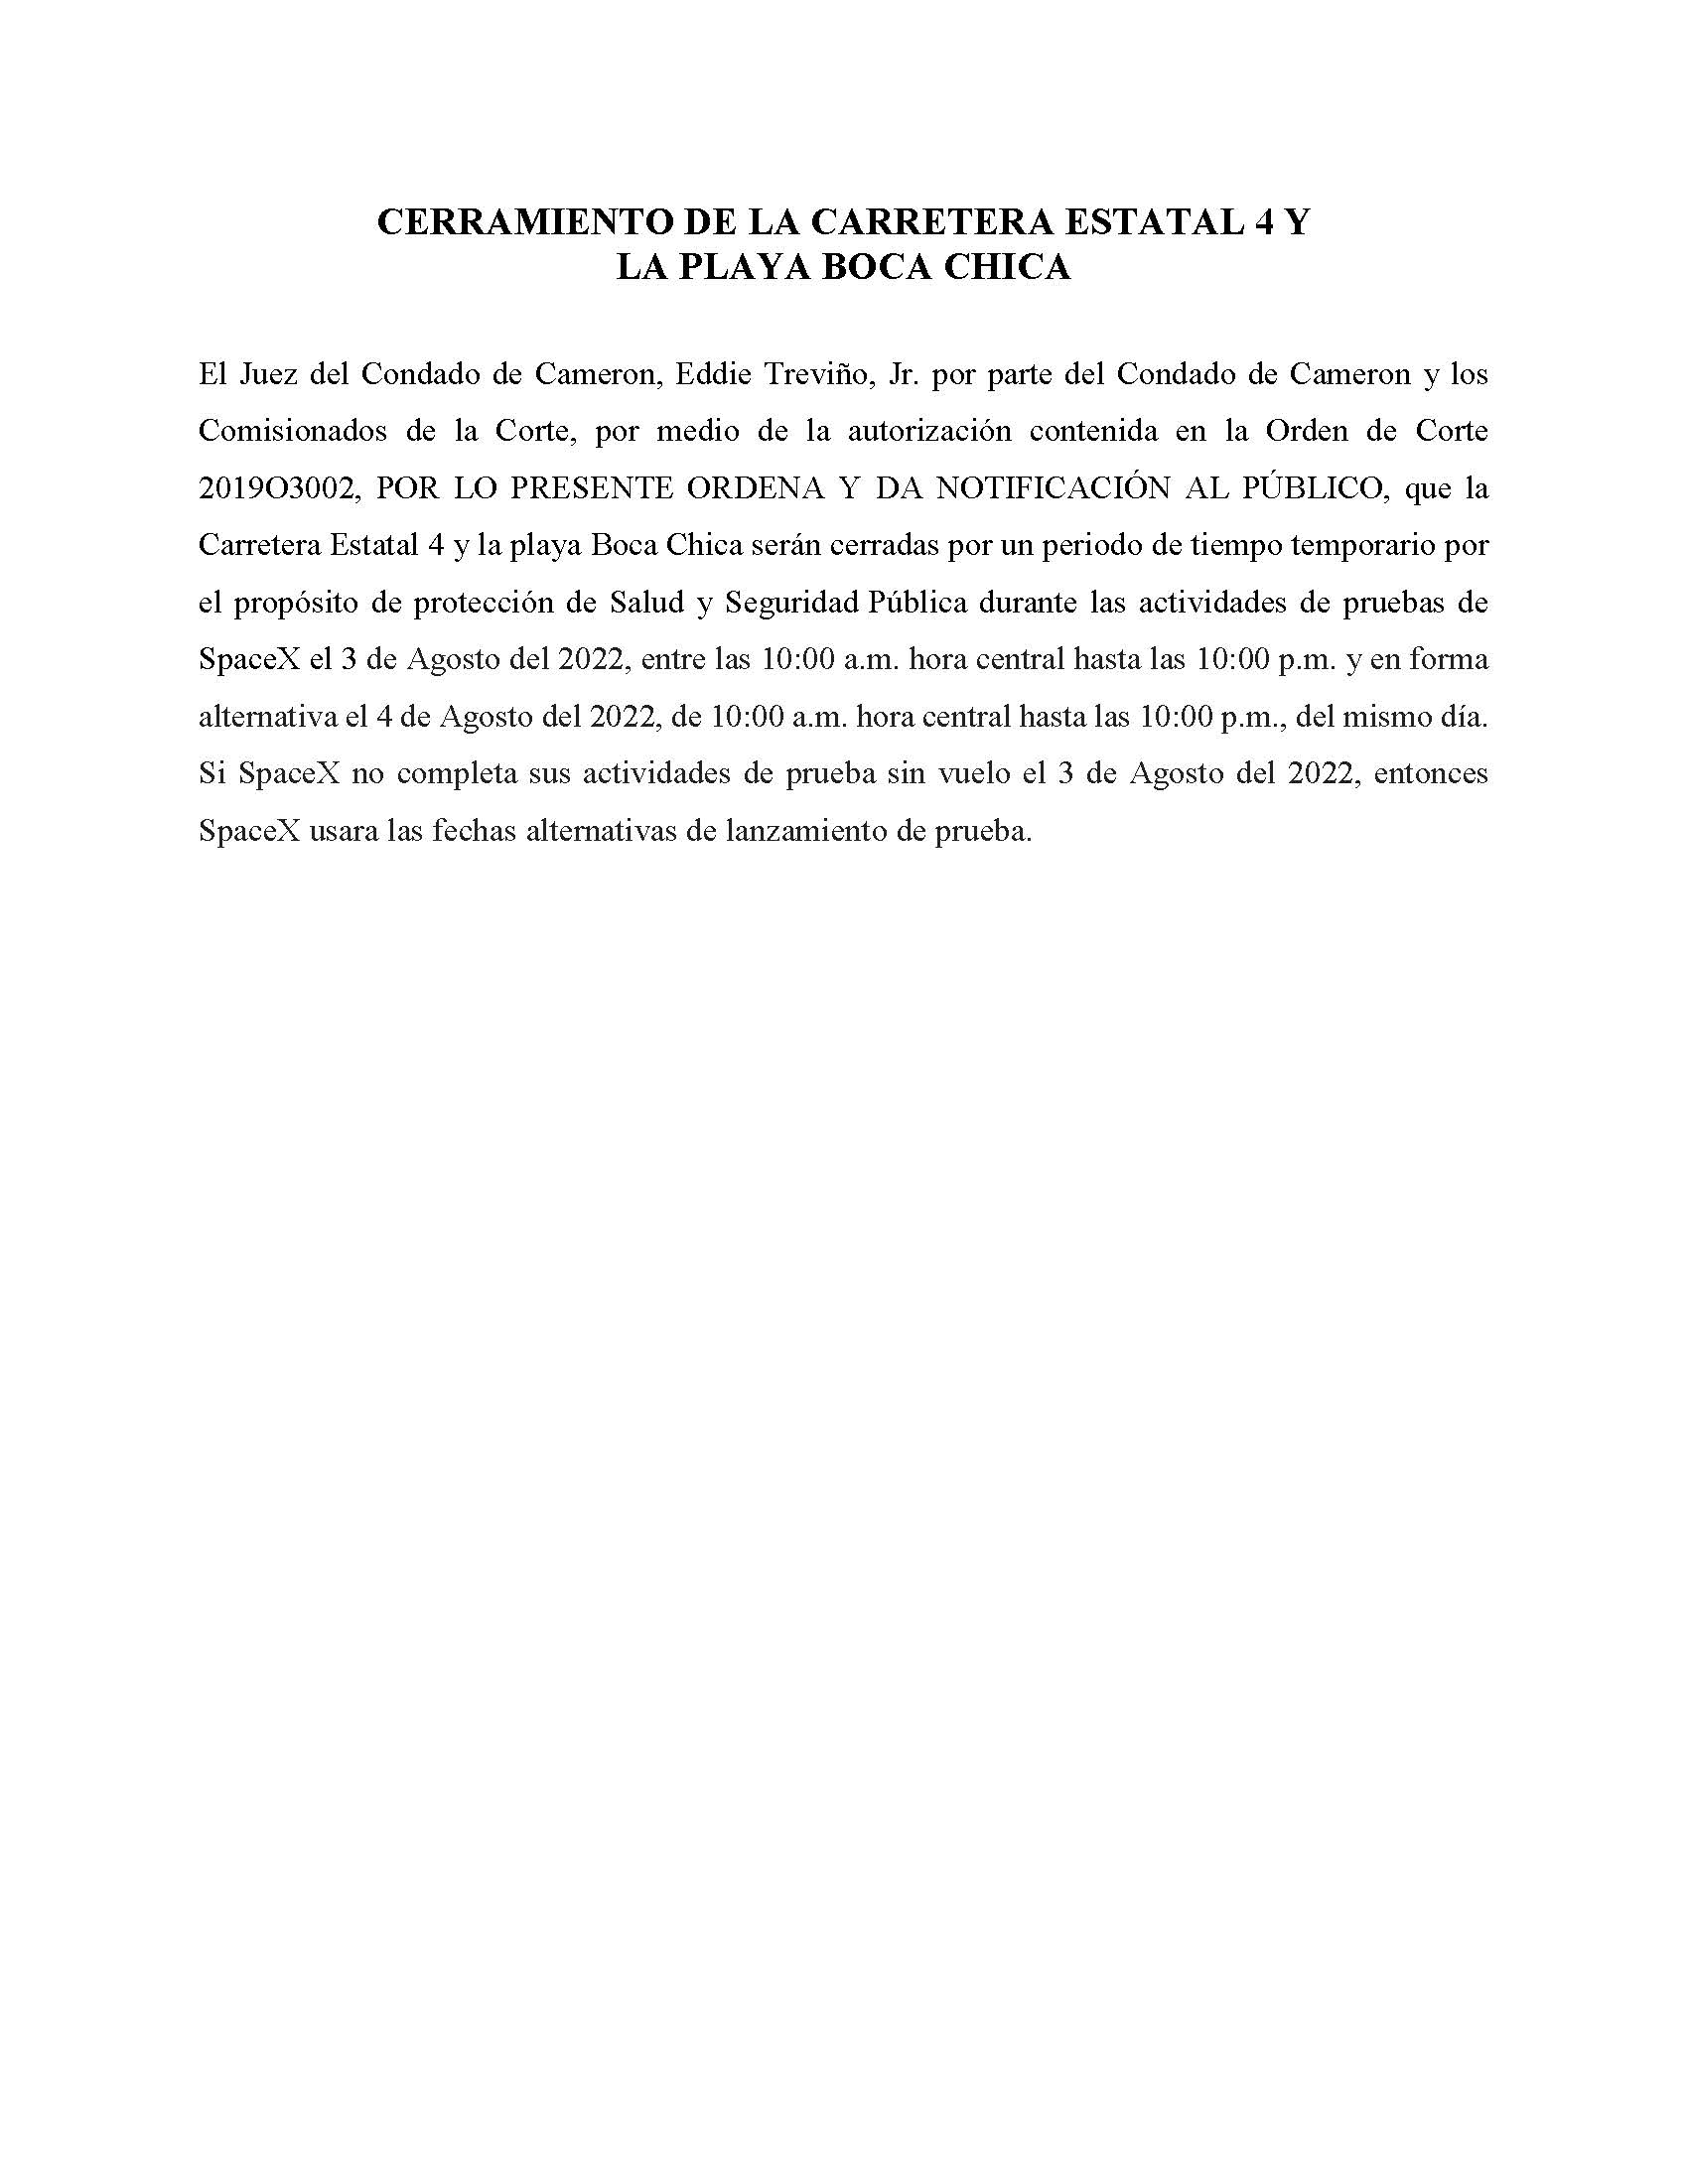 ORDER.CLOSURE OF HIGHWAY 4 Y LA PLAYA BOCA CHICA.SPANISH.08.03.2022